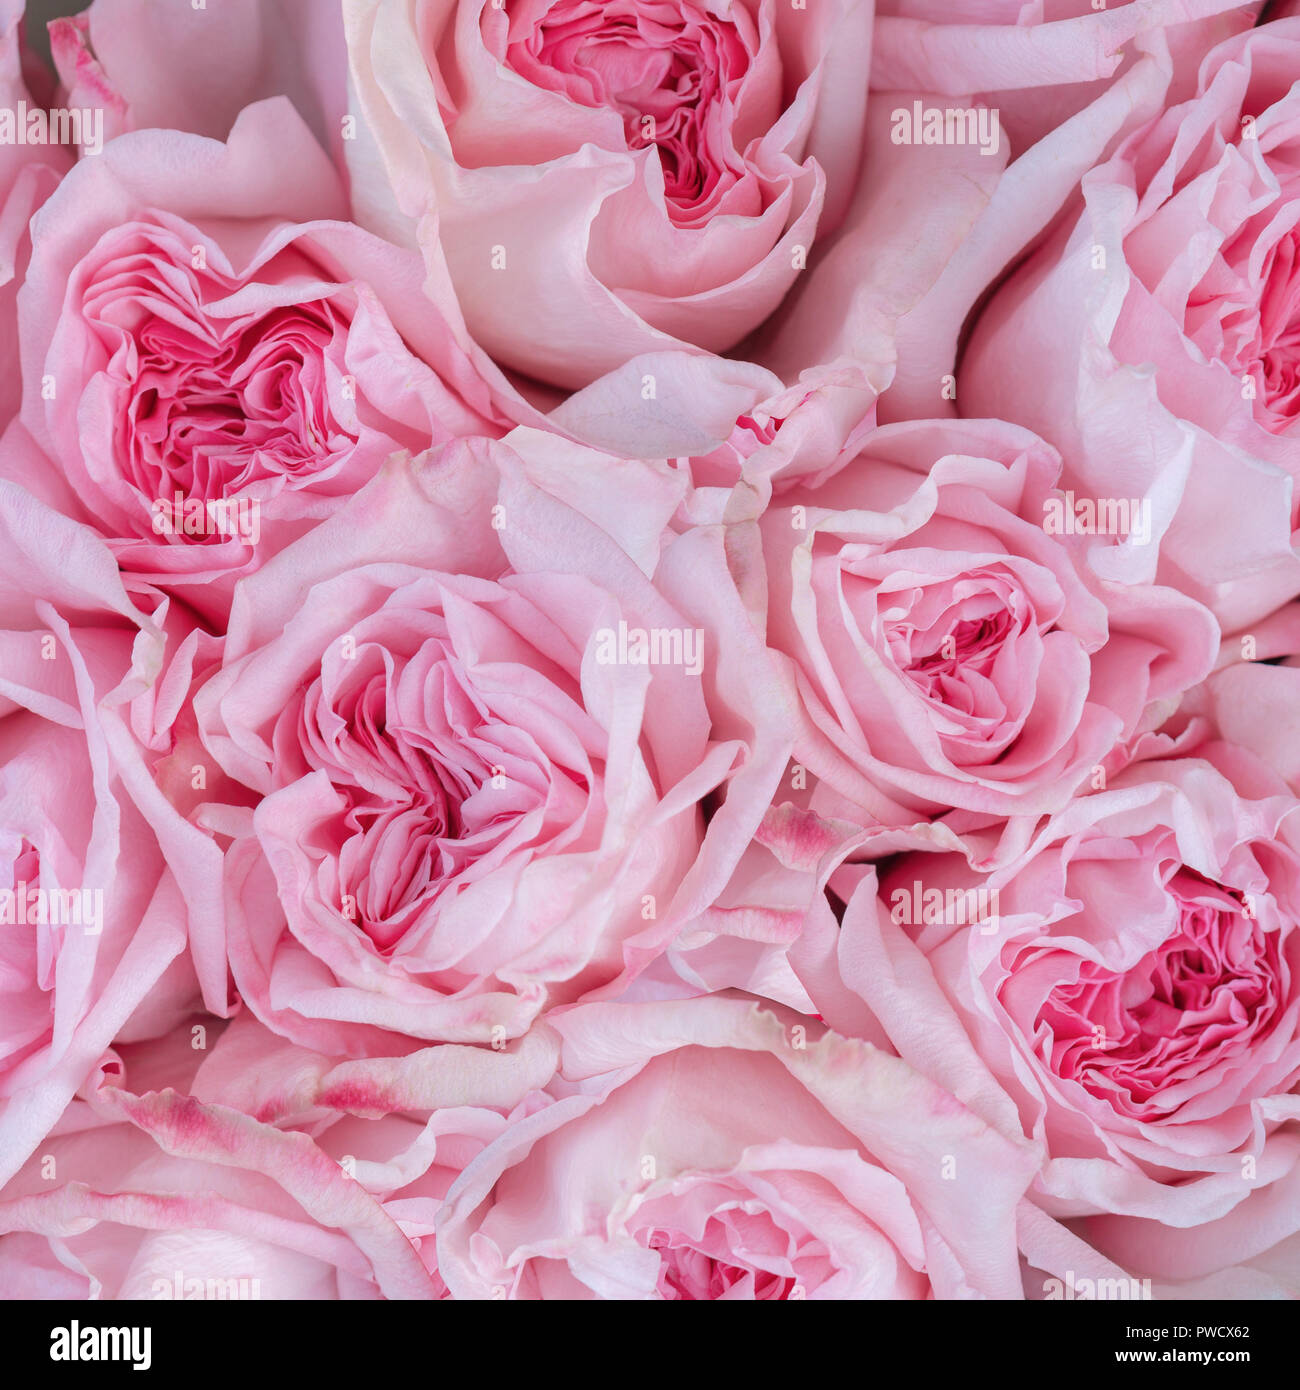 Splendida fioritura di rose di diverse tonalità di colore rosa Foto stock -  Alamy